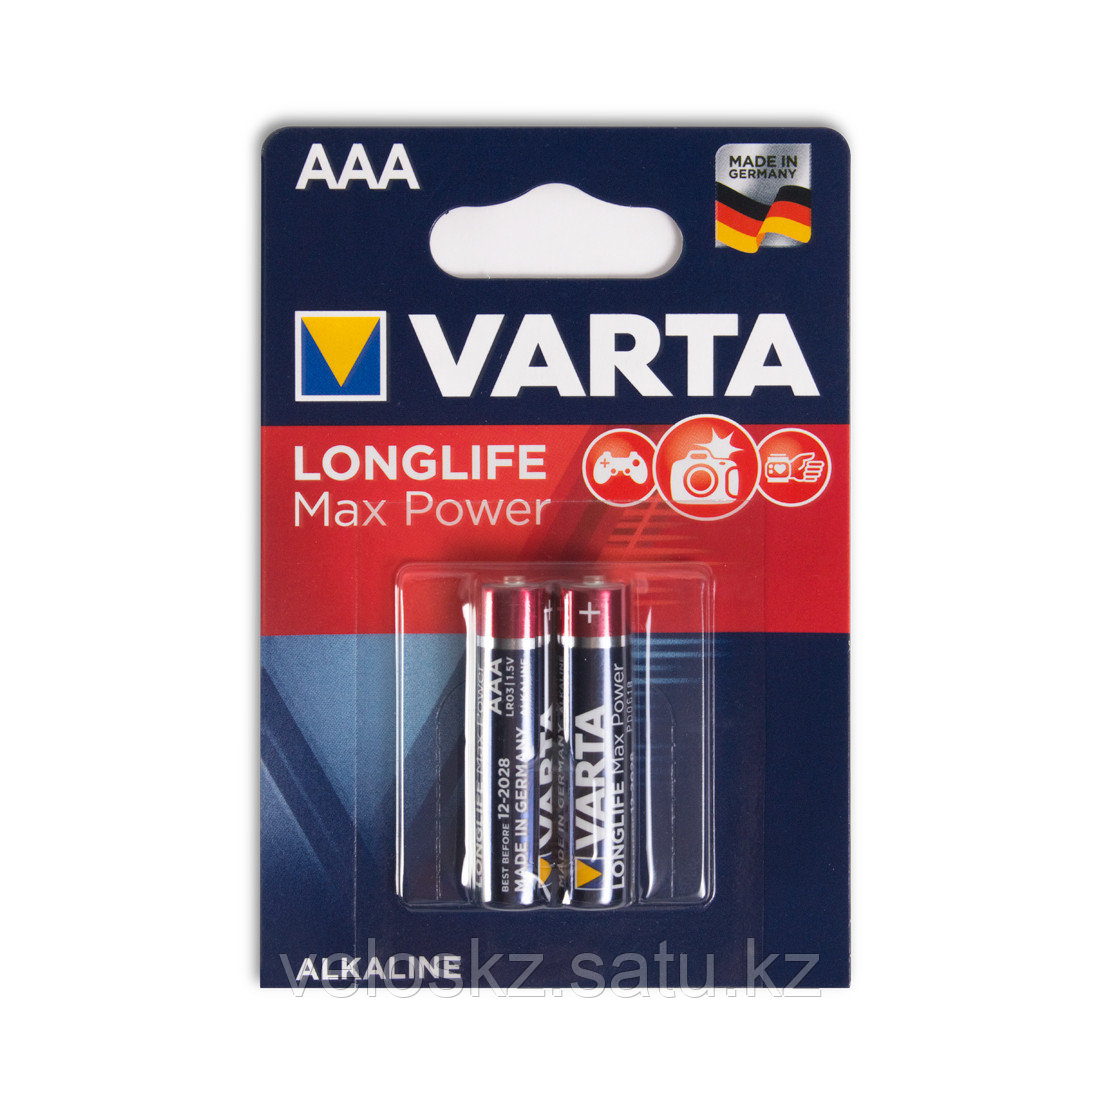 Varta Батарейки VARTA, ААА, LR03 Long Life Max Power 2шт